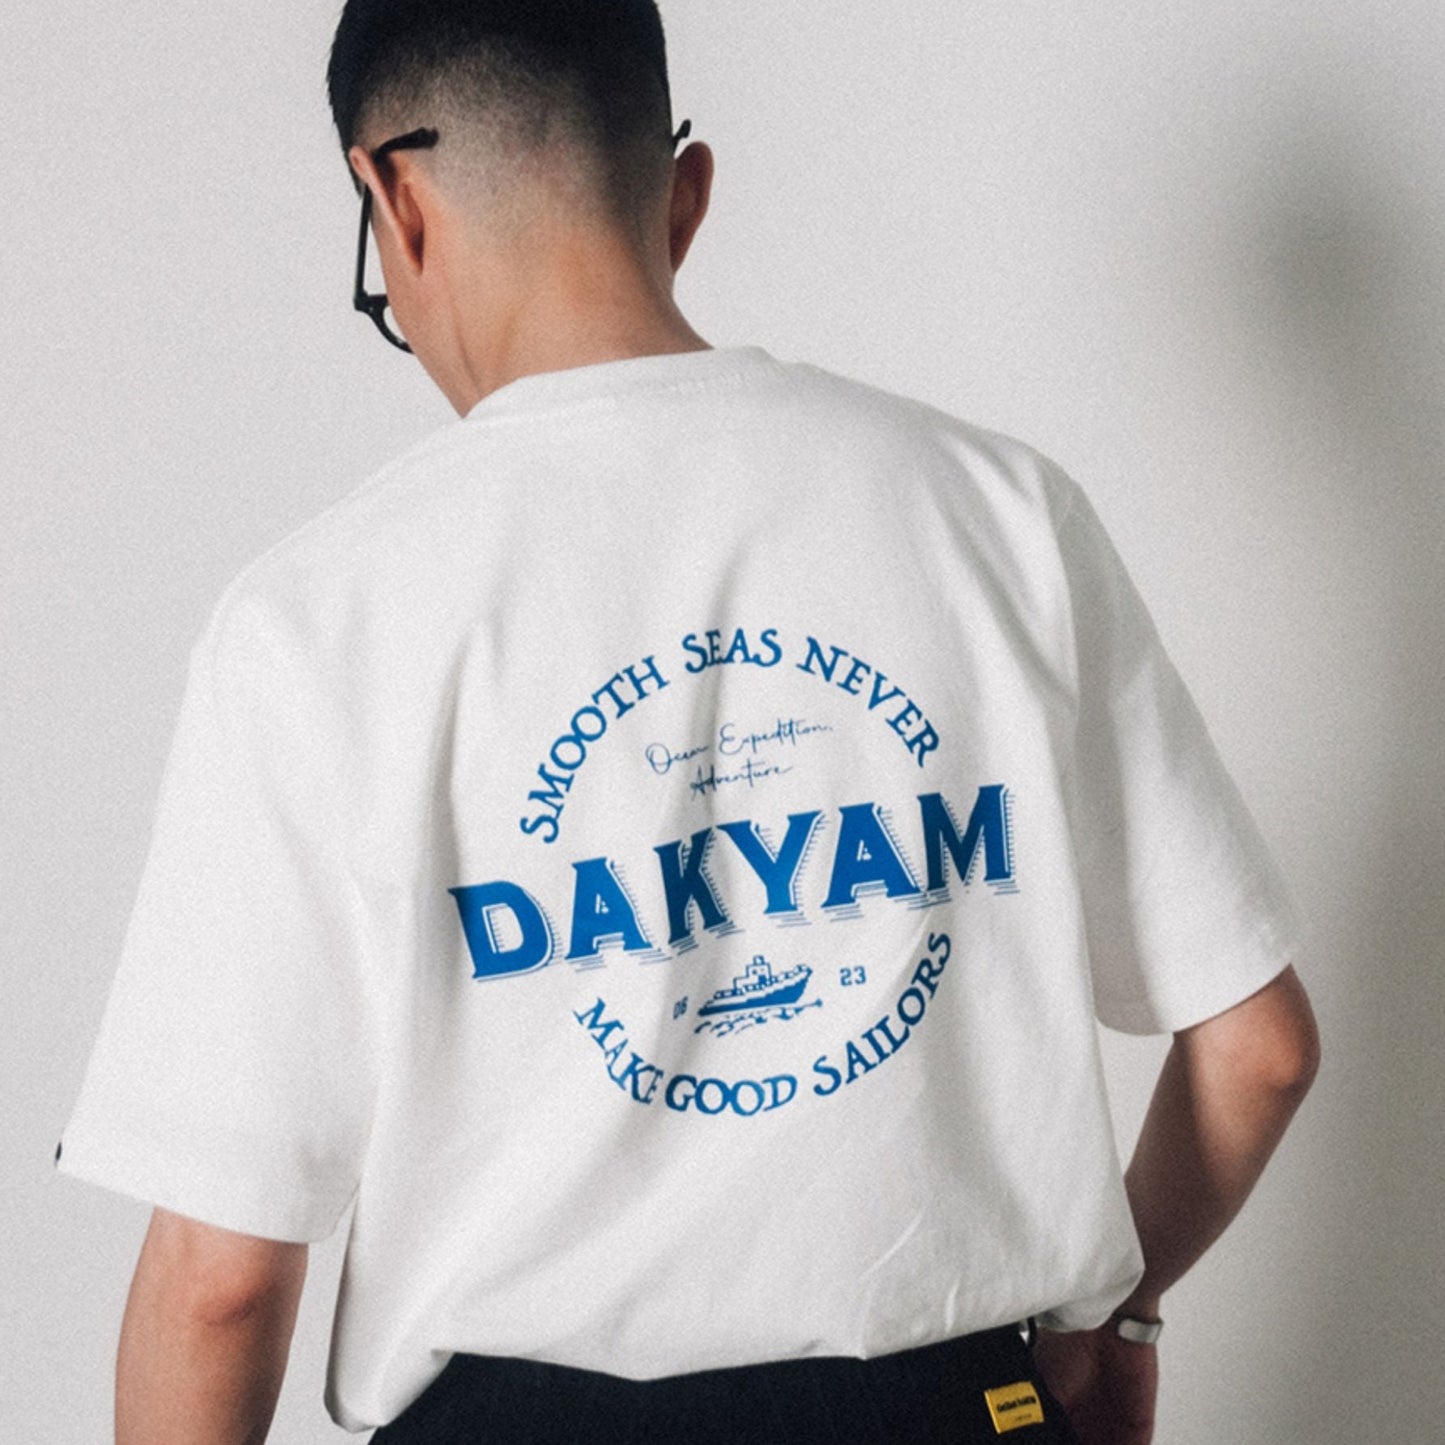 DAKYAM / FS-076 Being A Good Sailor Life TEE shirt